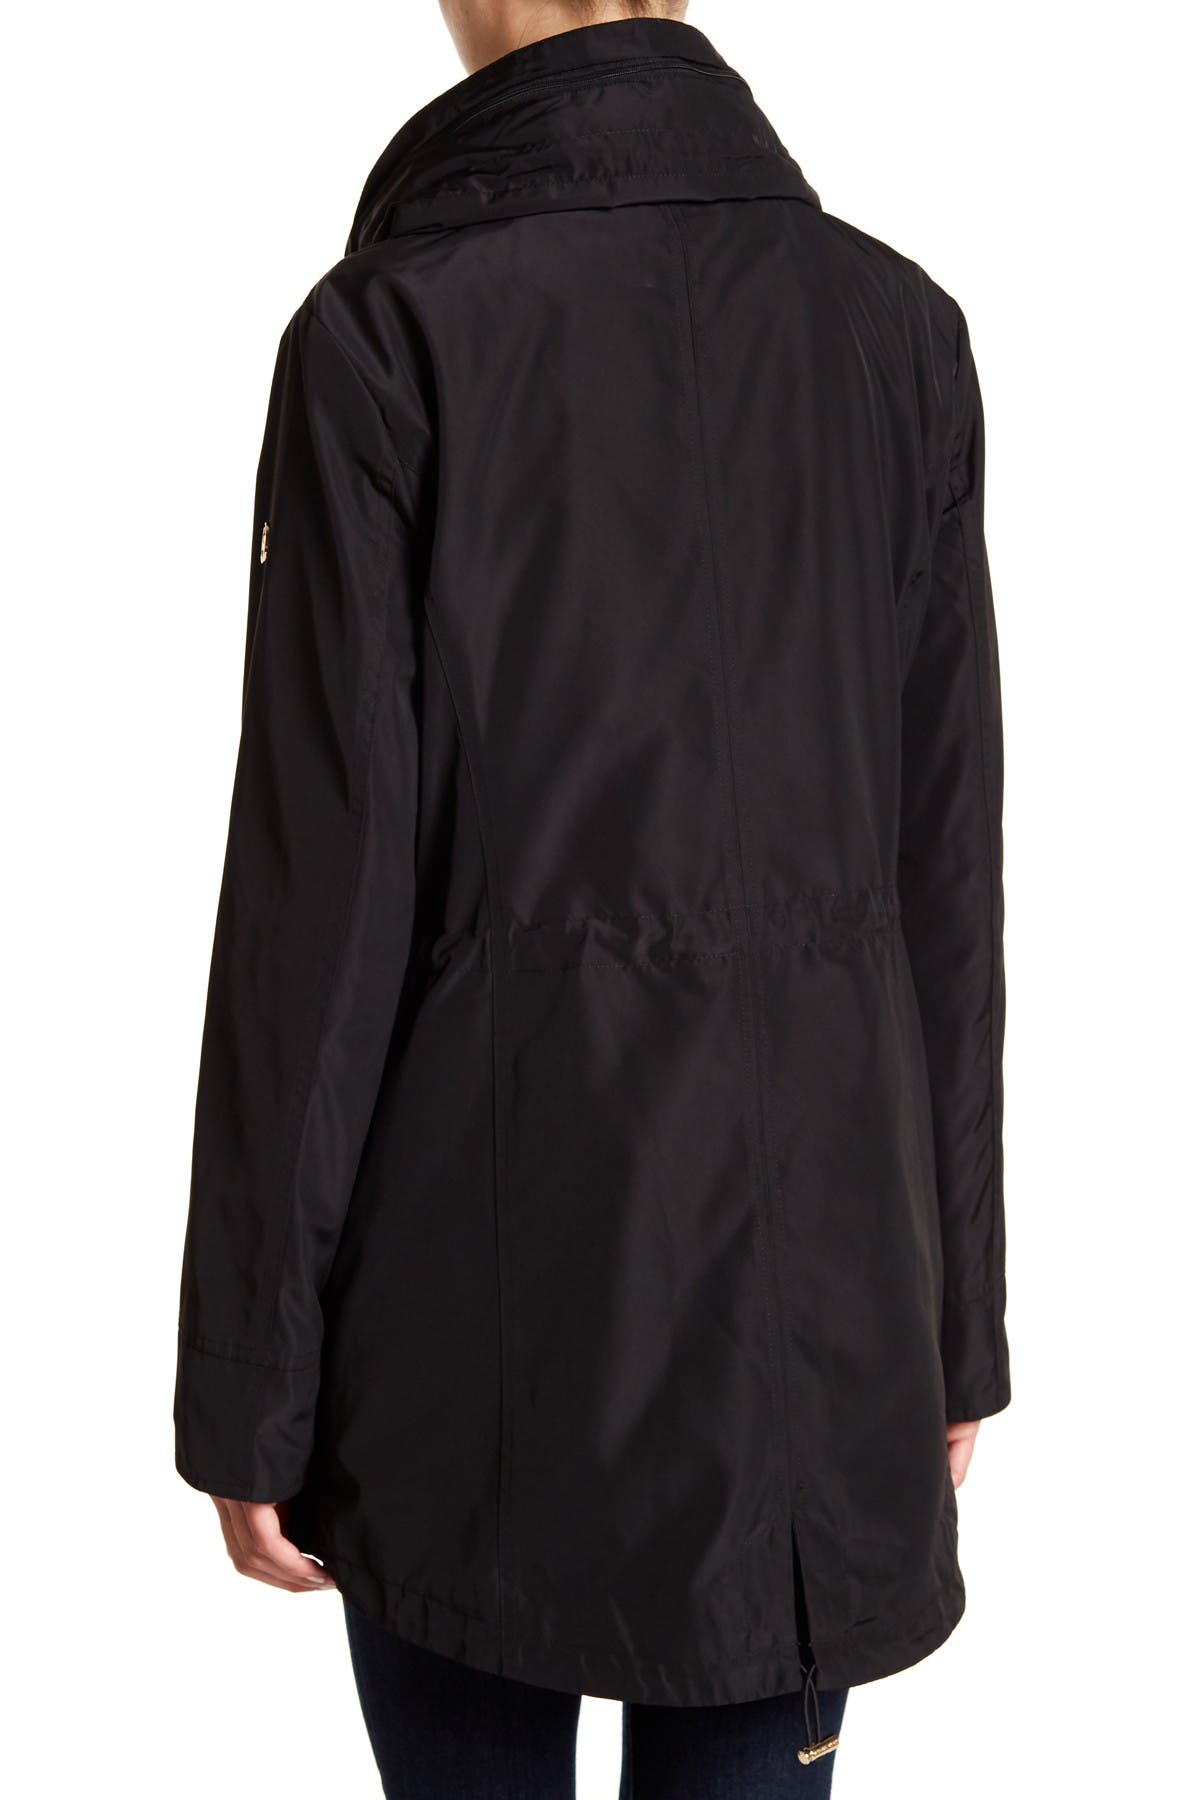 michael kors black raincoat with hood